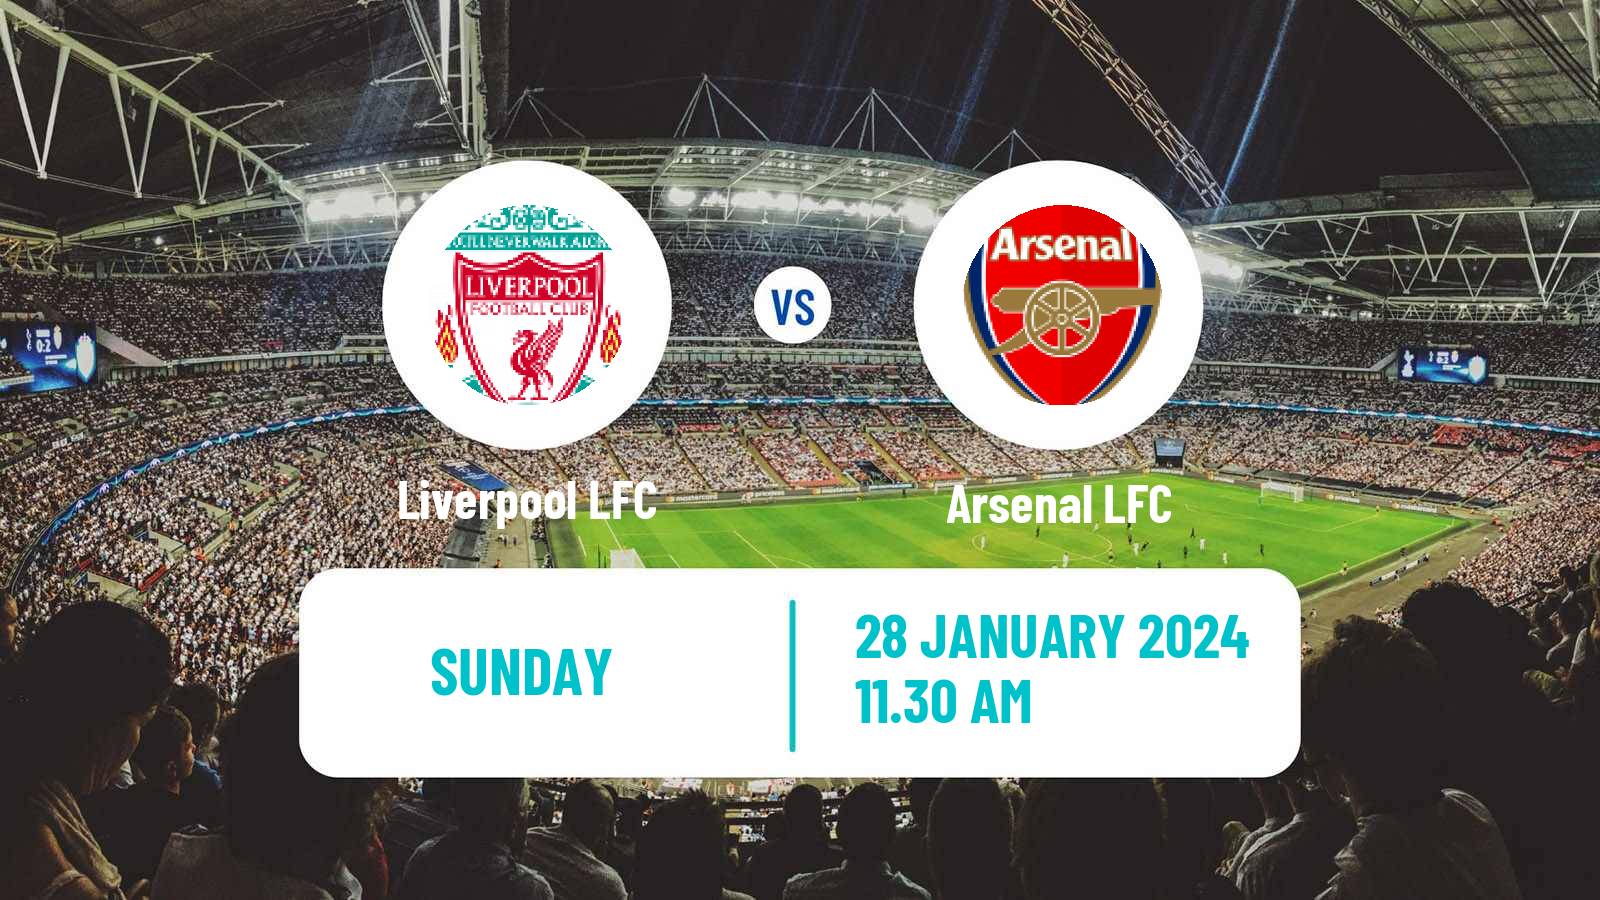 Soccer English WSL Liverpool LFC - Arsenal LFC